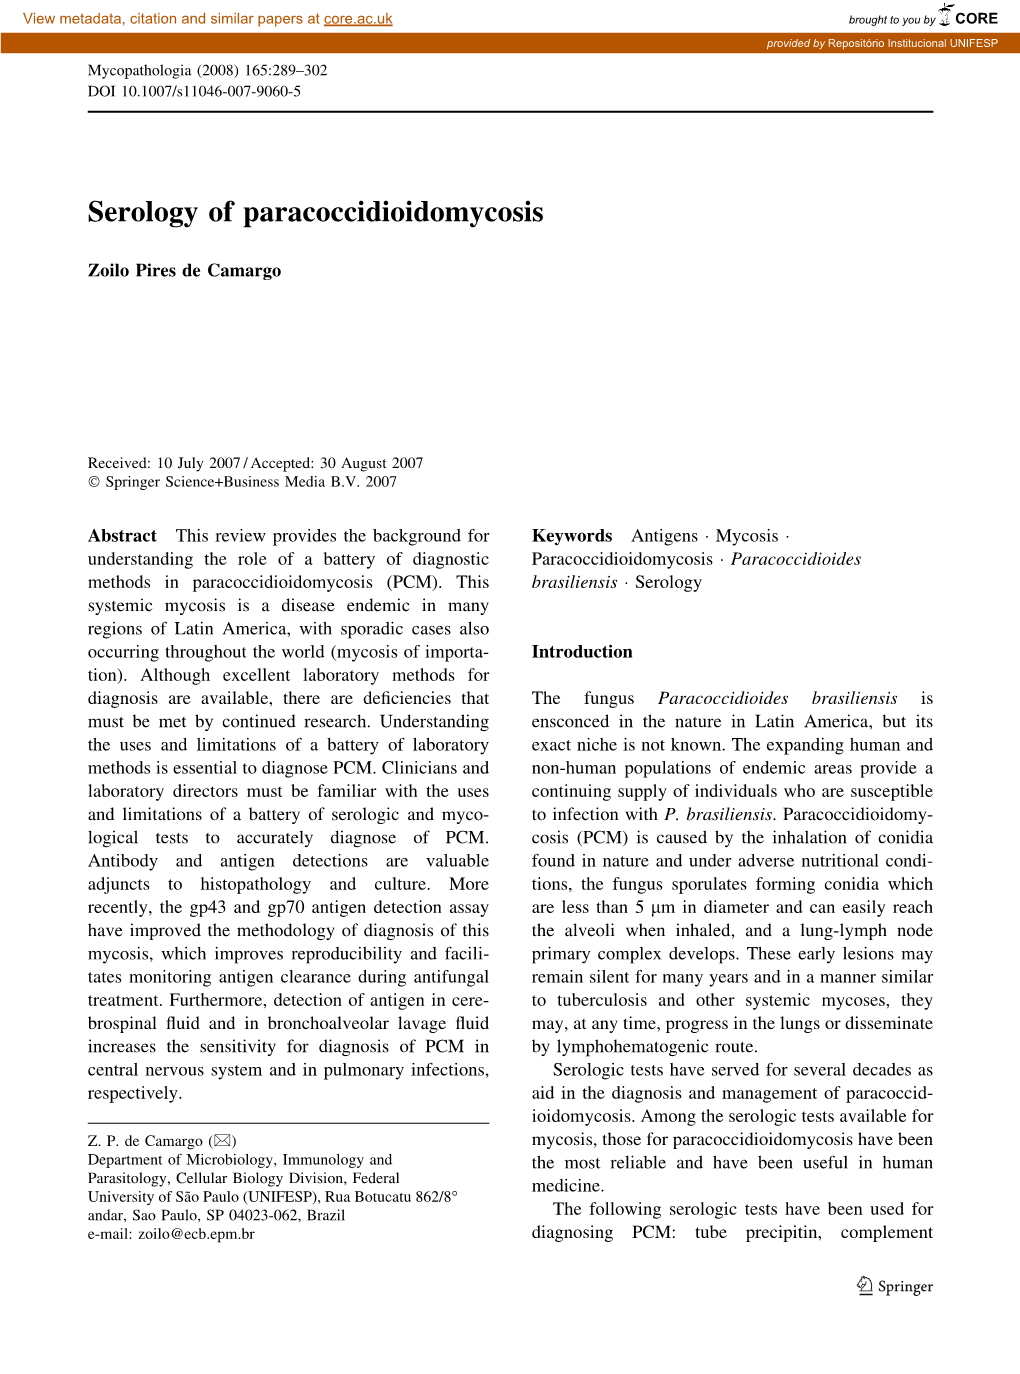 Serology of Paracoccidioidomycosis